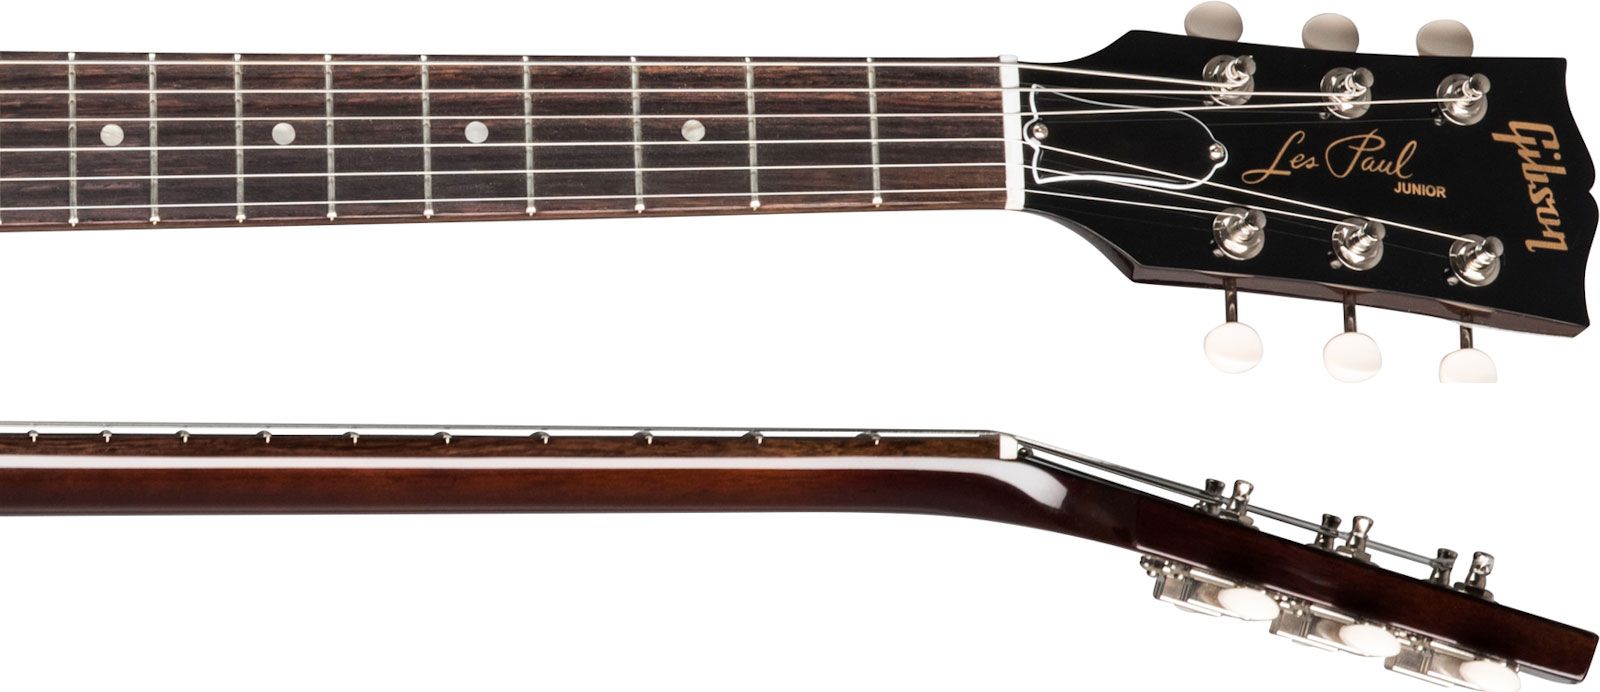 Gibson Les Paul Junior Original P90 Ht Rw - Vintage Tobacco Burst - Enkel gesneden elektrische gitaar - Variation 3